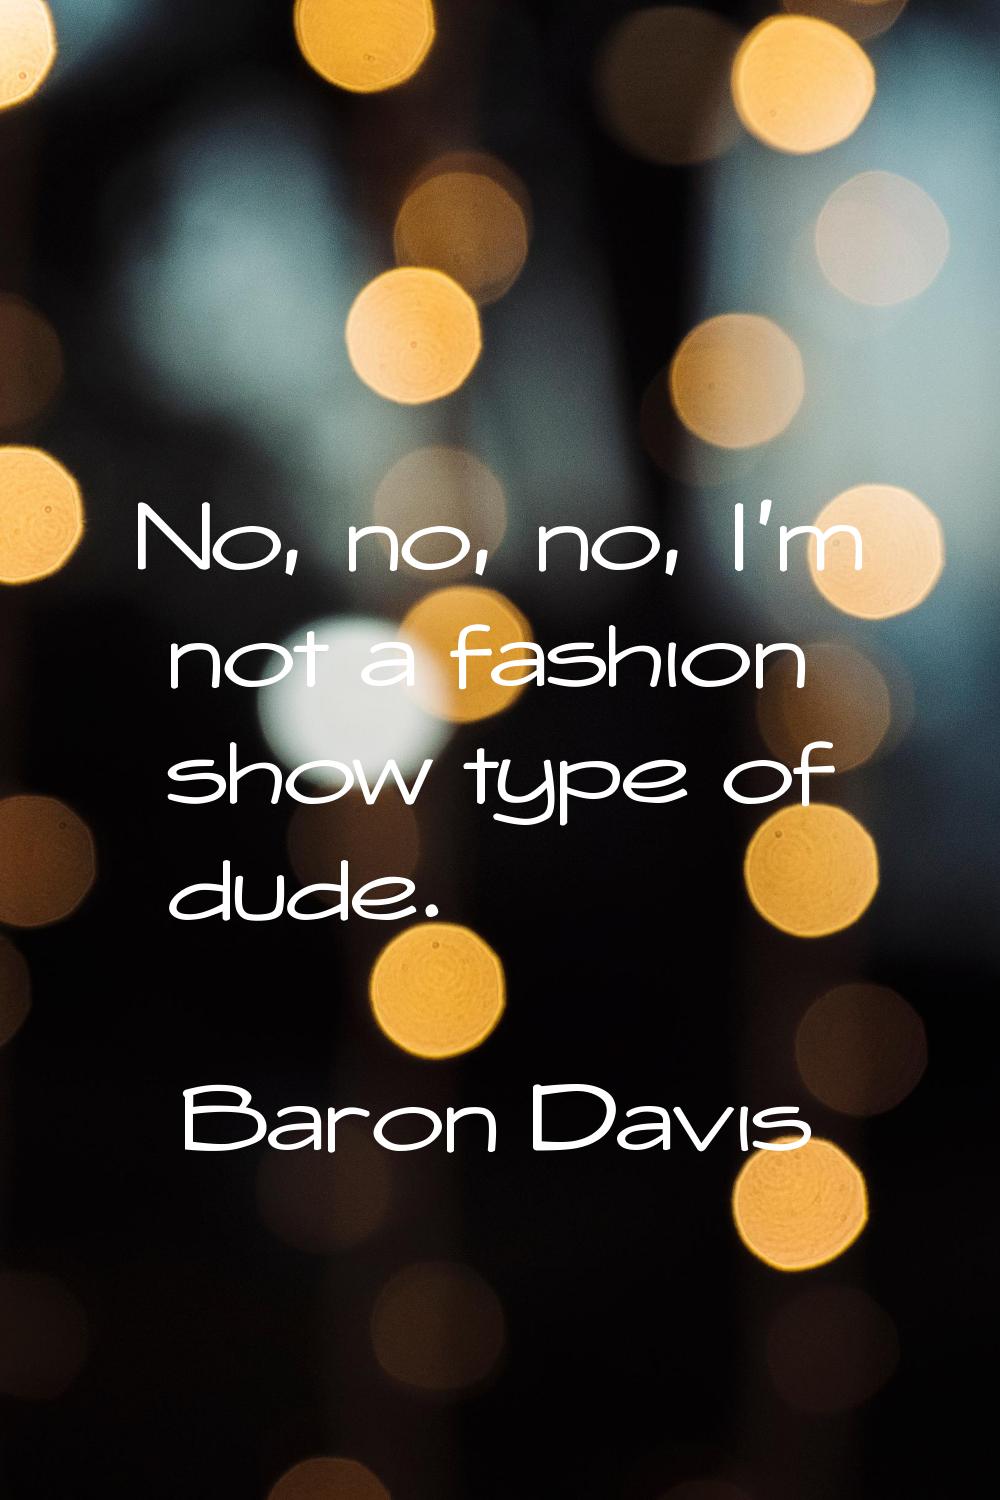 No, no, no, I'm not a fashion show type of dude.